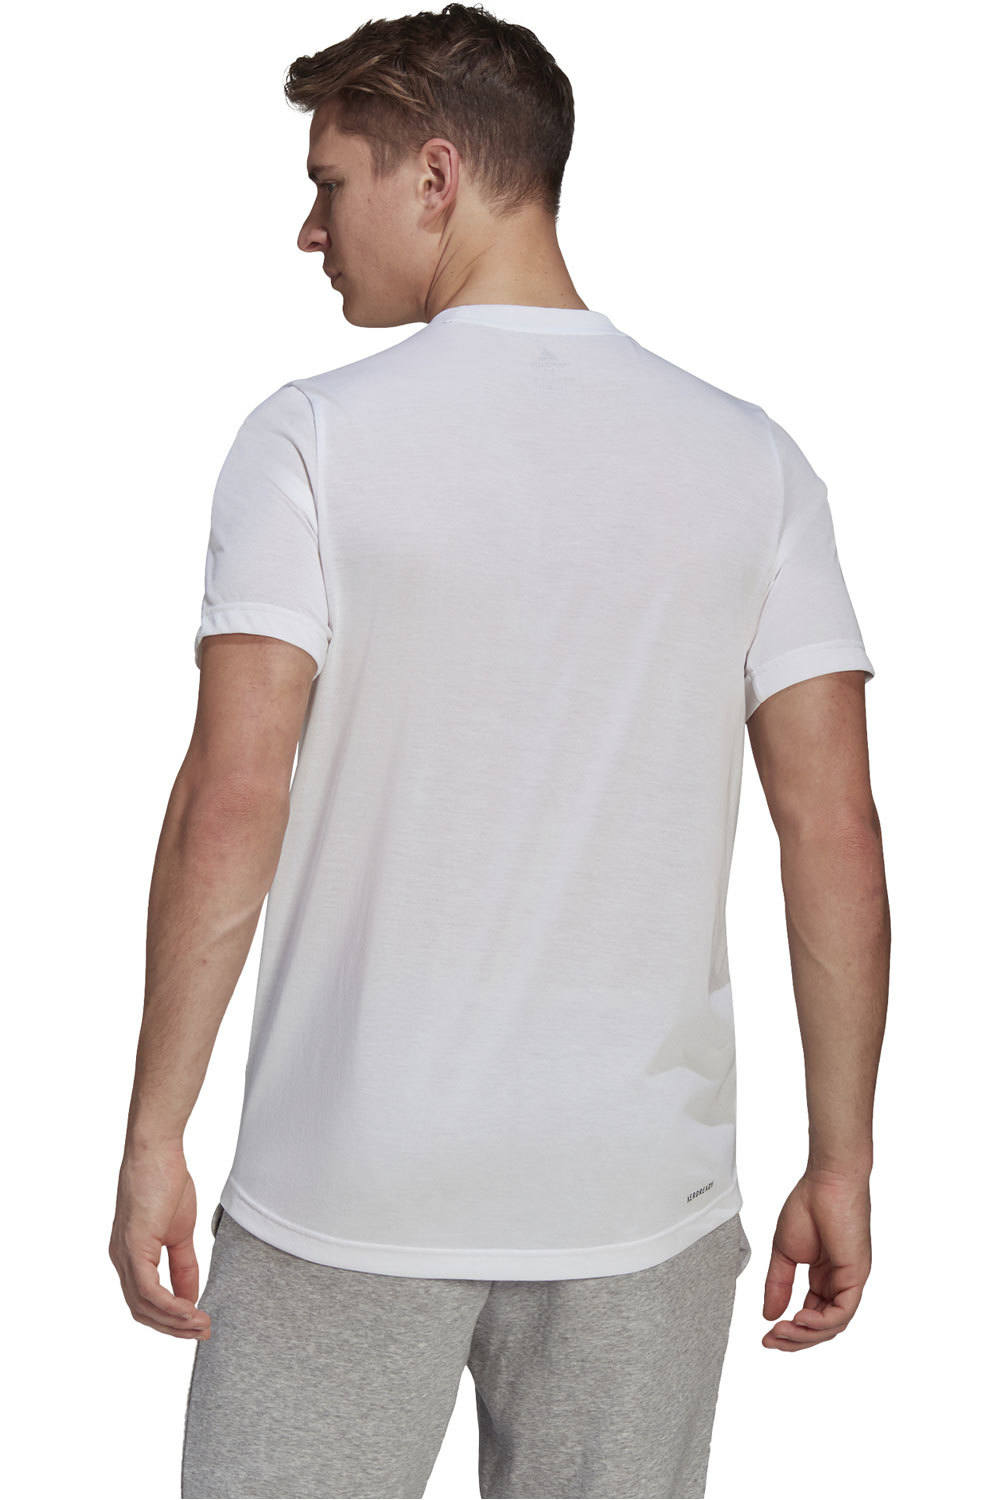 adidas camiseta fitness hombre AEROREADY Designed 2 Move Feelready Sport vista trasera